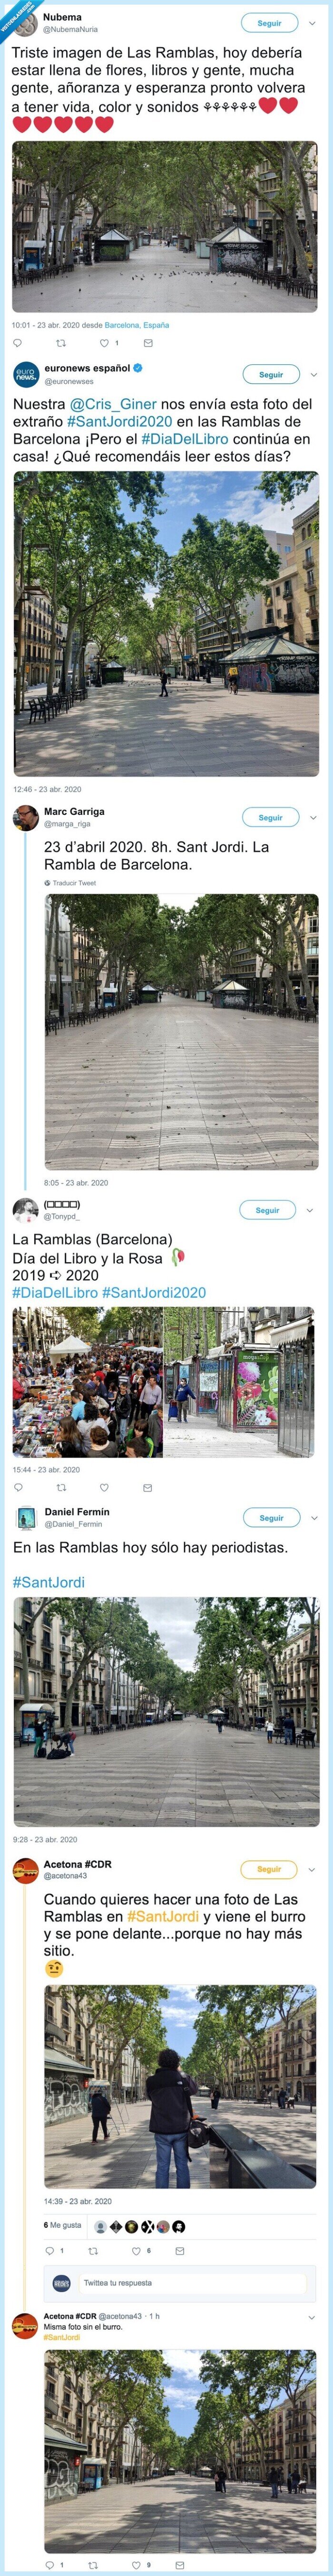 23 de abril,barcelona,ramblas,2020,sant jordi